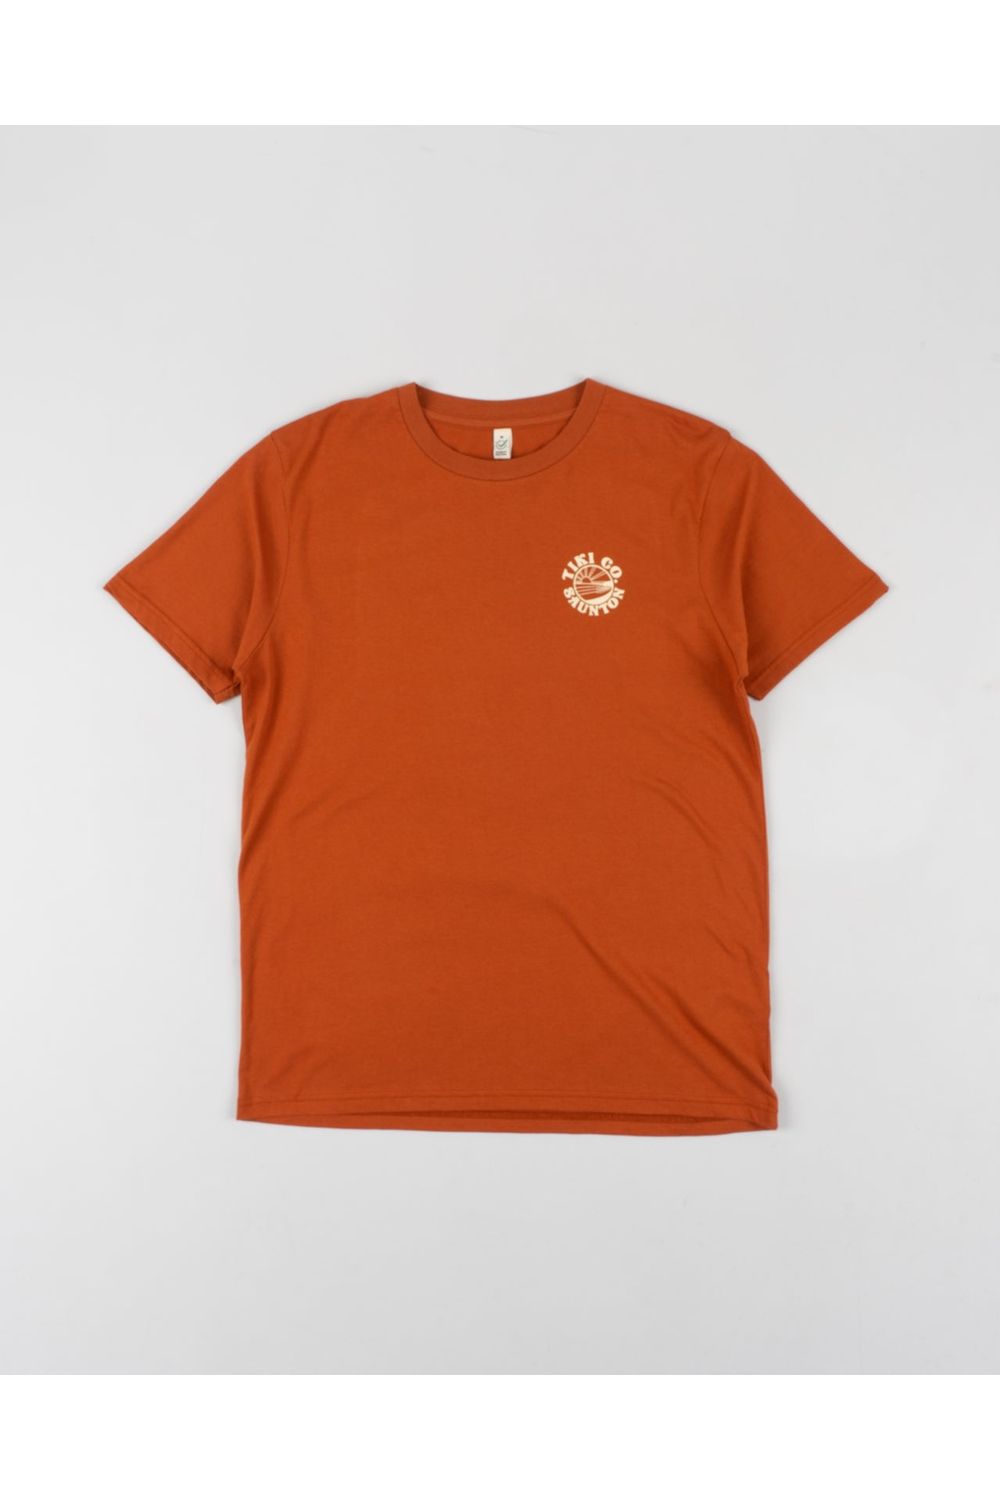 Tiki Saunton T-Shirt